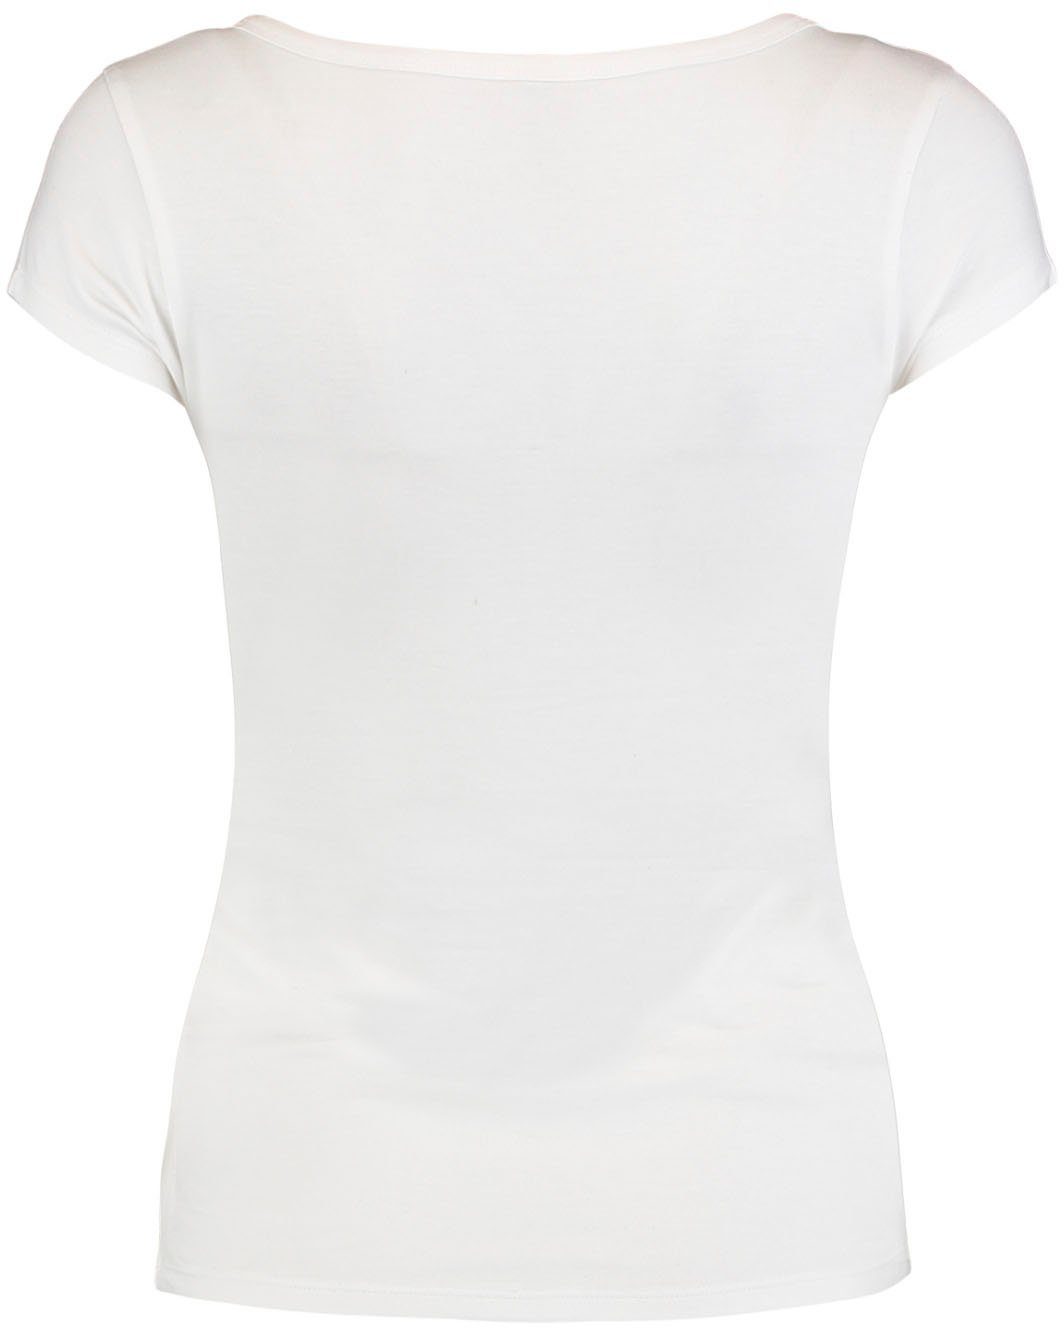 HaILY’S T-Shirt TP Henna white